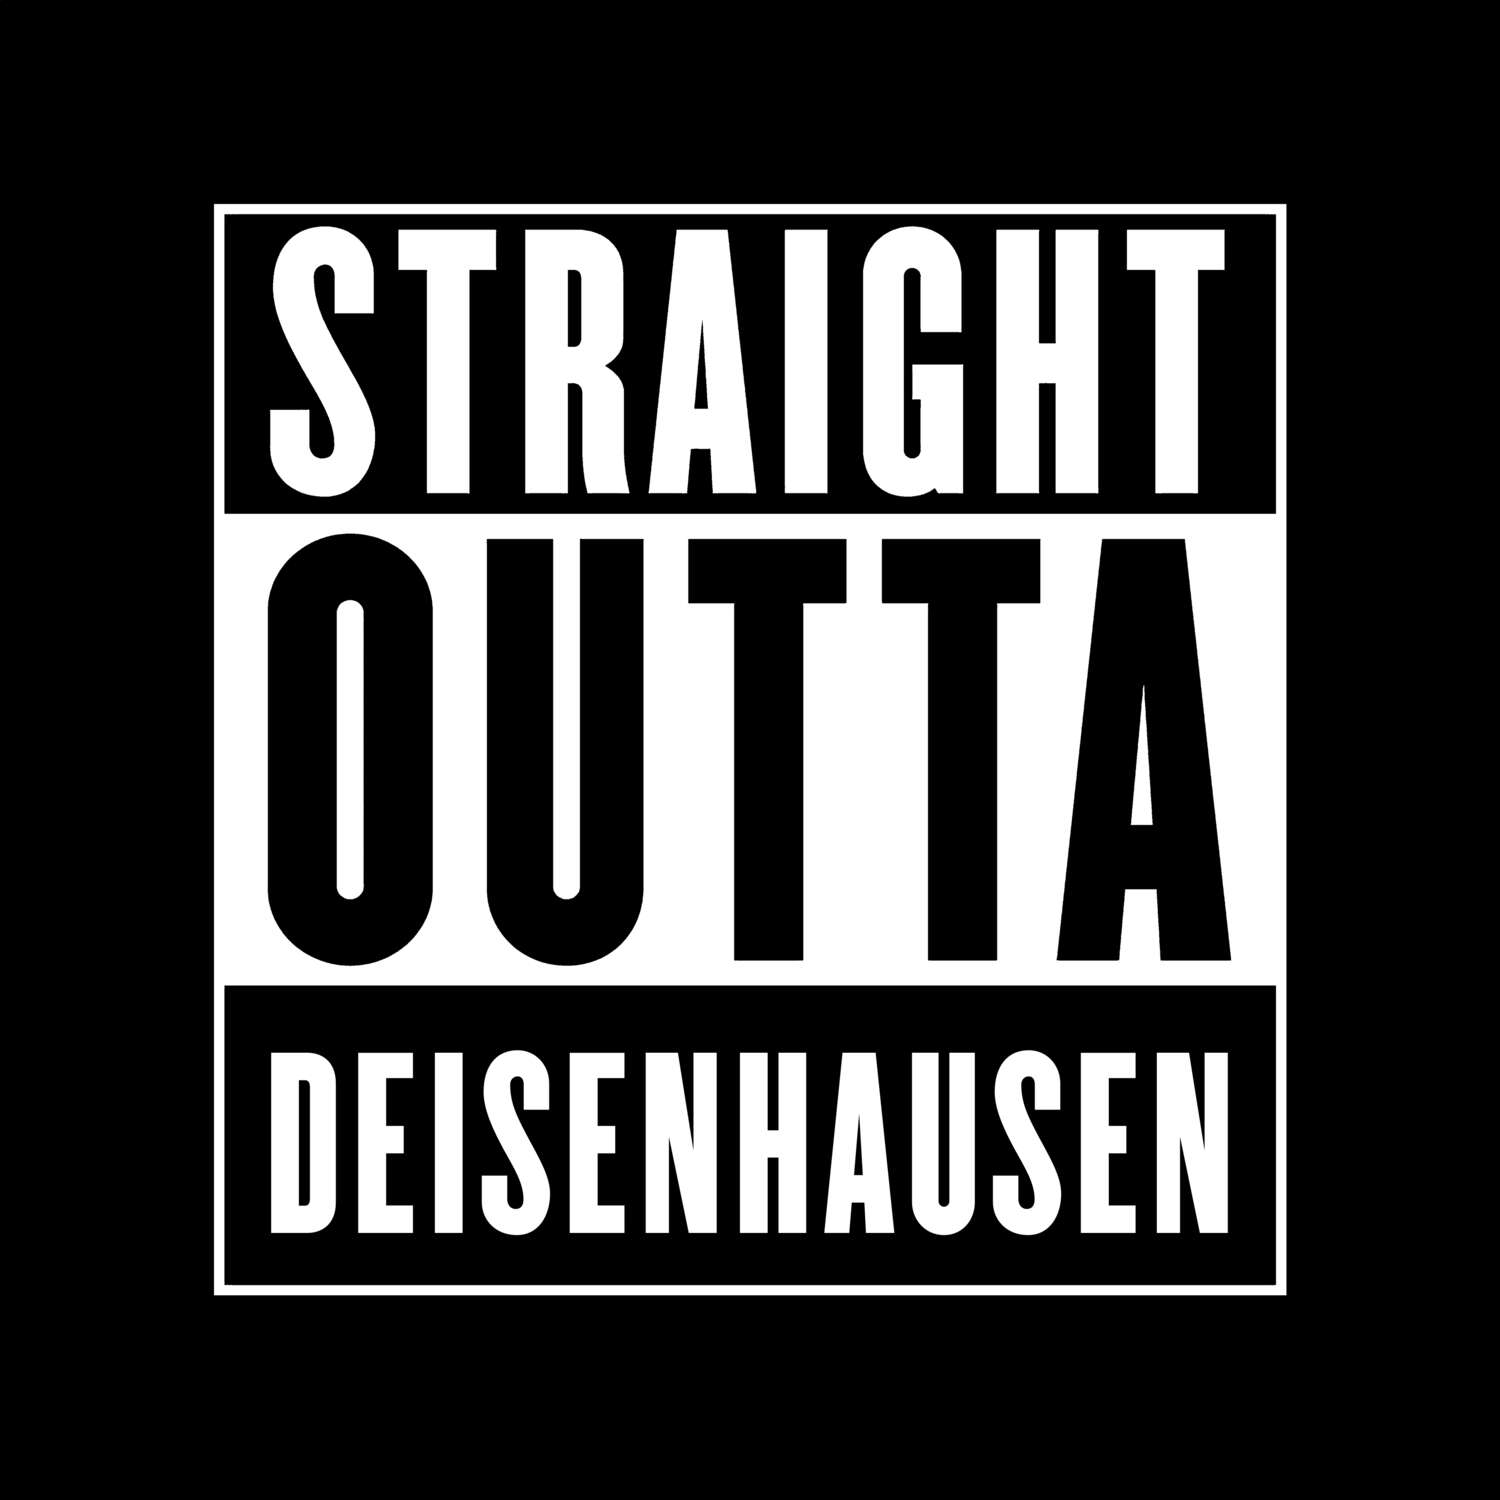 Deisenhausen T-Shirt »Straight Outta«